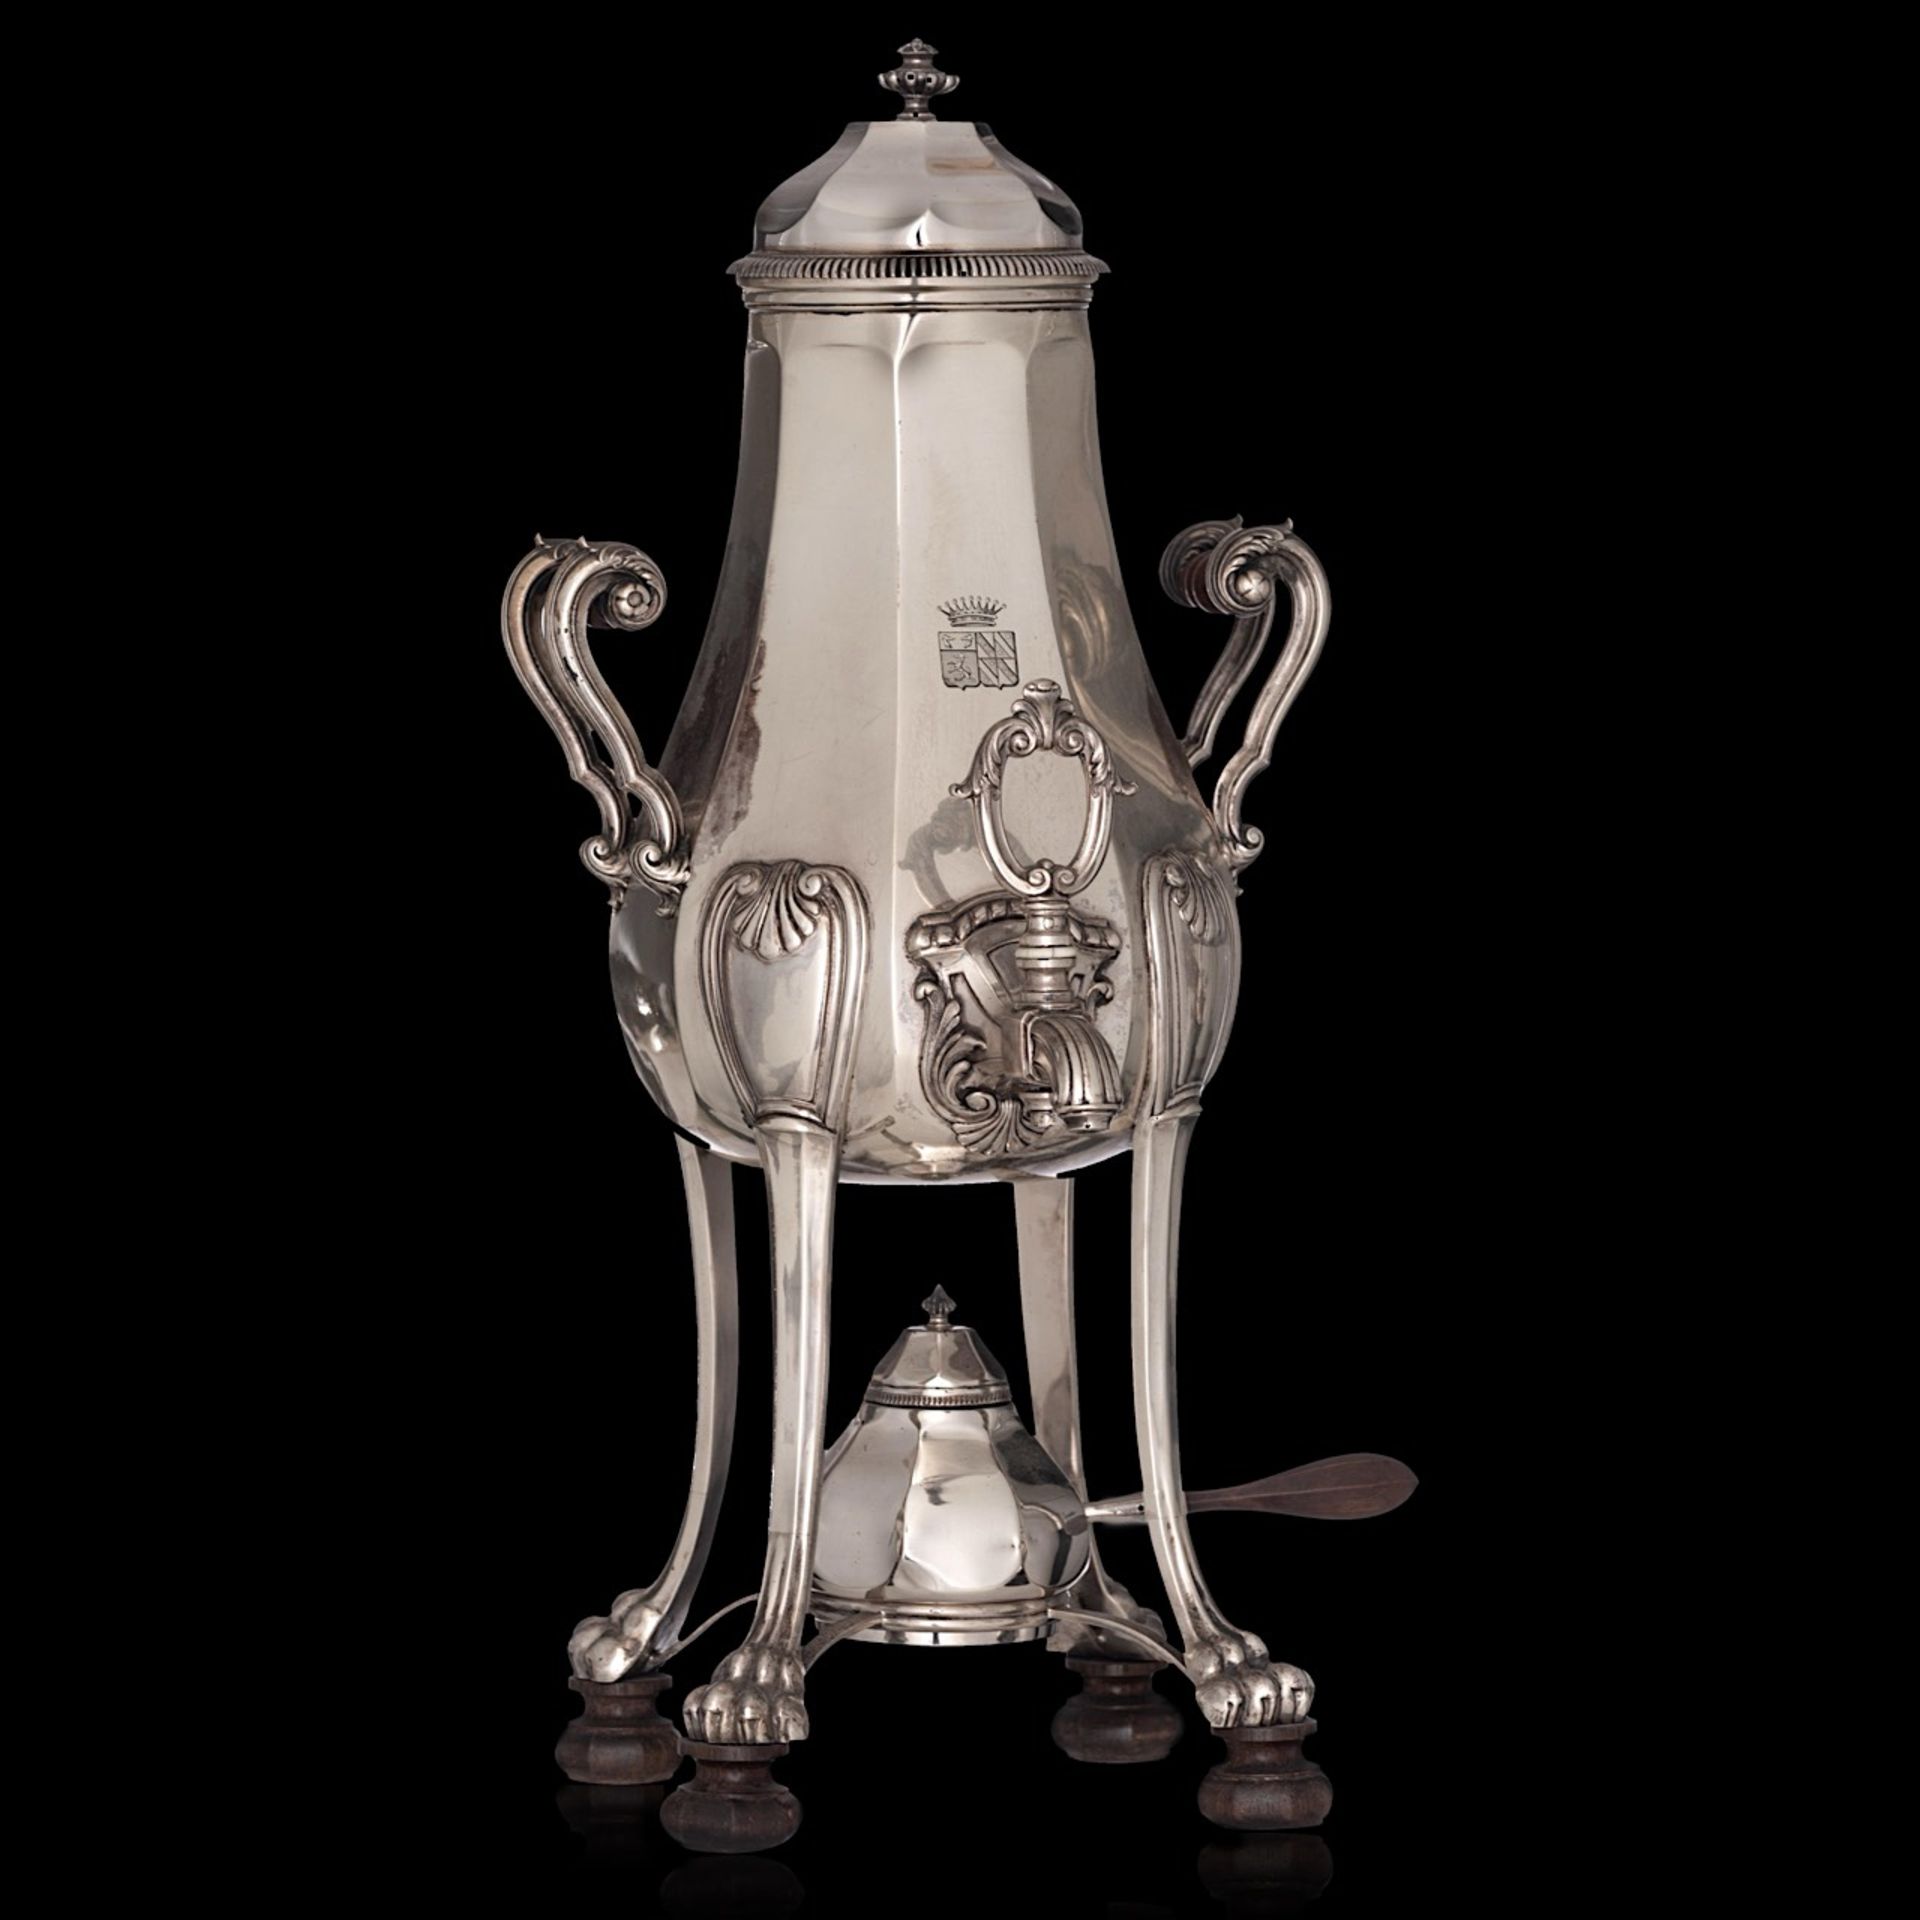 A French - Paris 19thC Regence silver tea urn, maker's mark 'Tetard - Paris', H 42,6 cm - weight c.